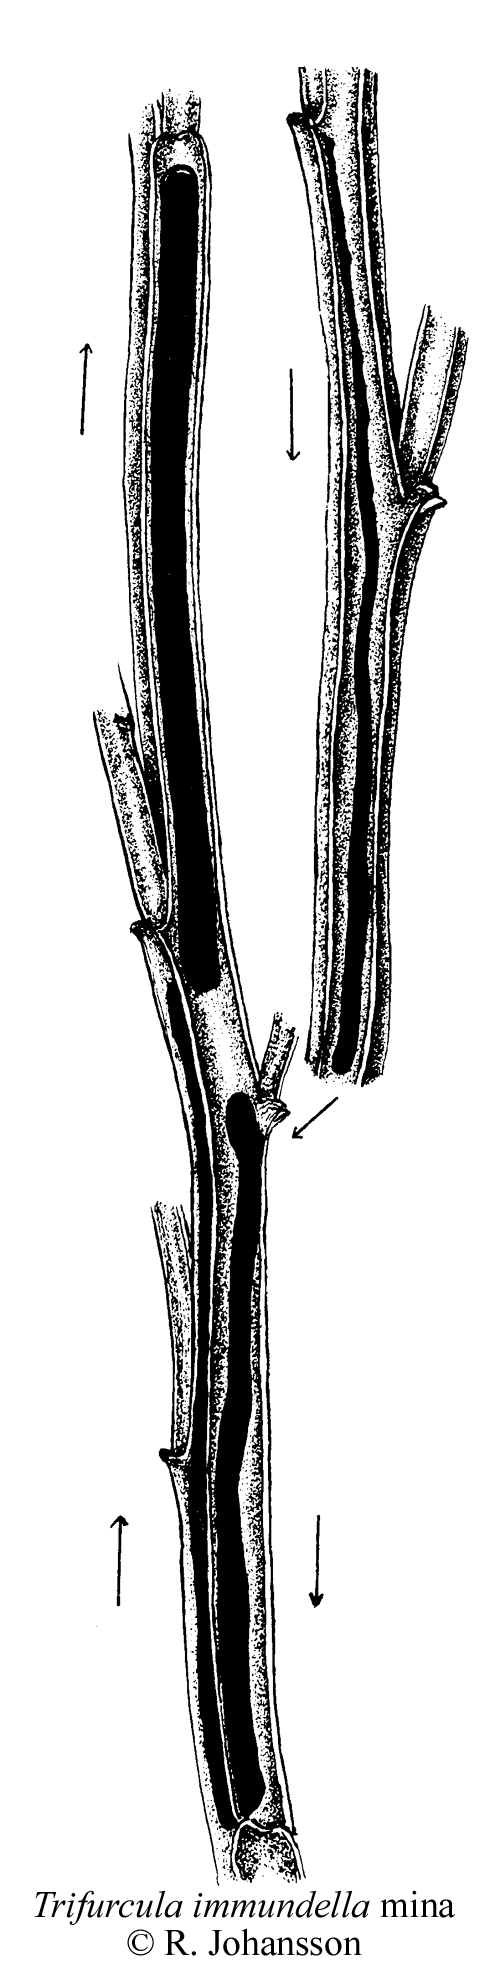 Harrisdvrgmal Trifurcula immundella